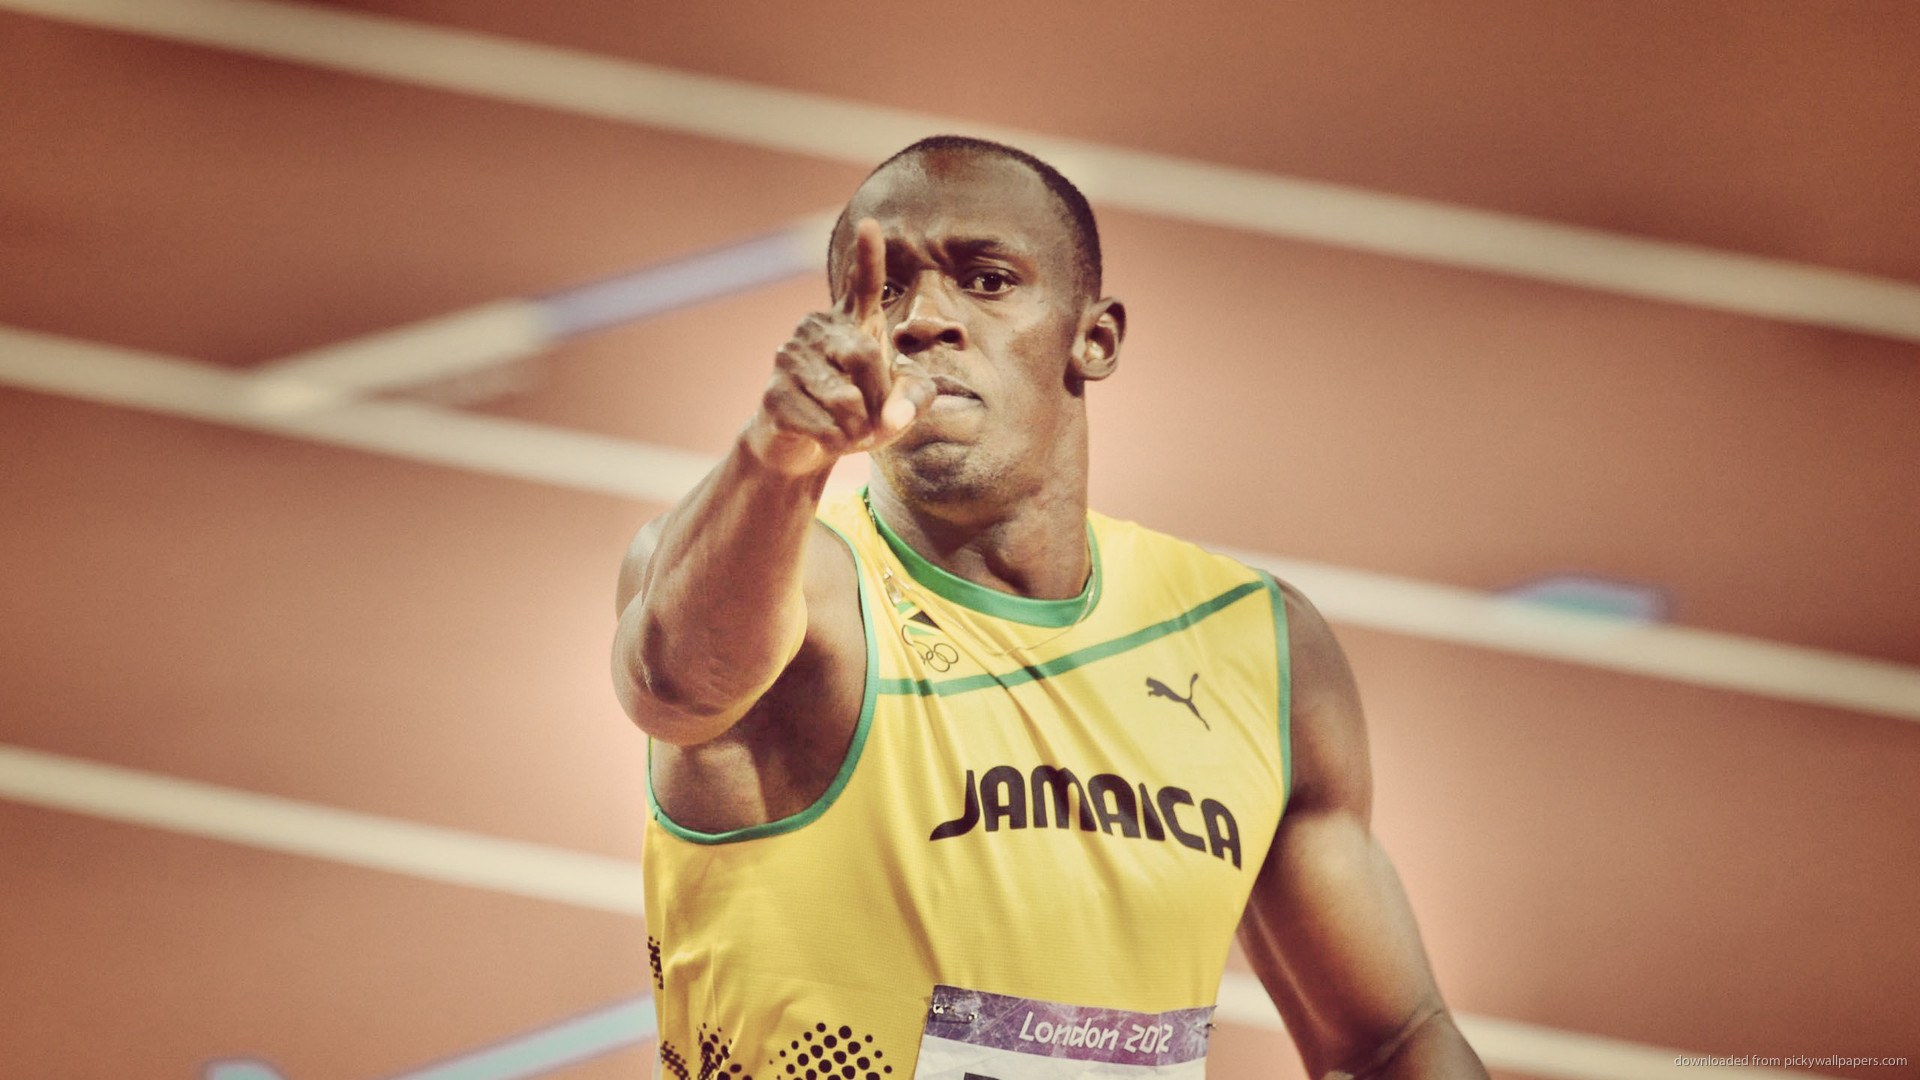 1920x1080 Usain Bolt Points His Finger picture